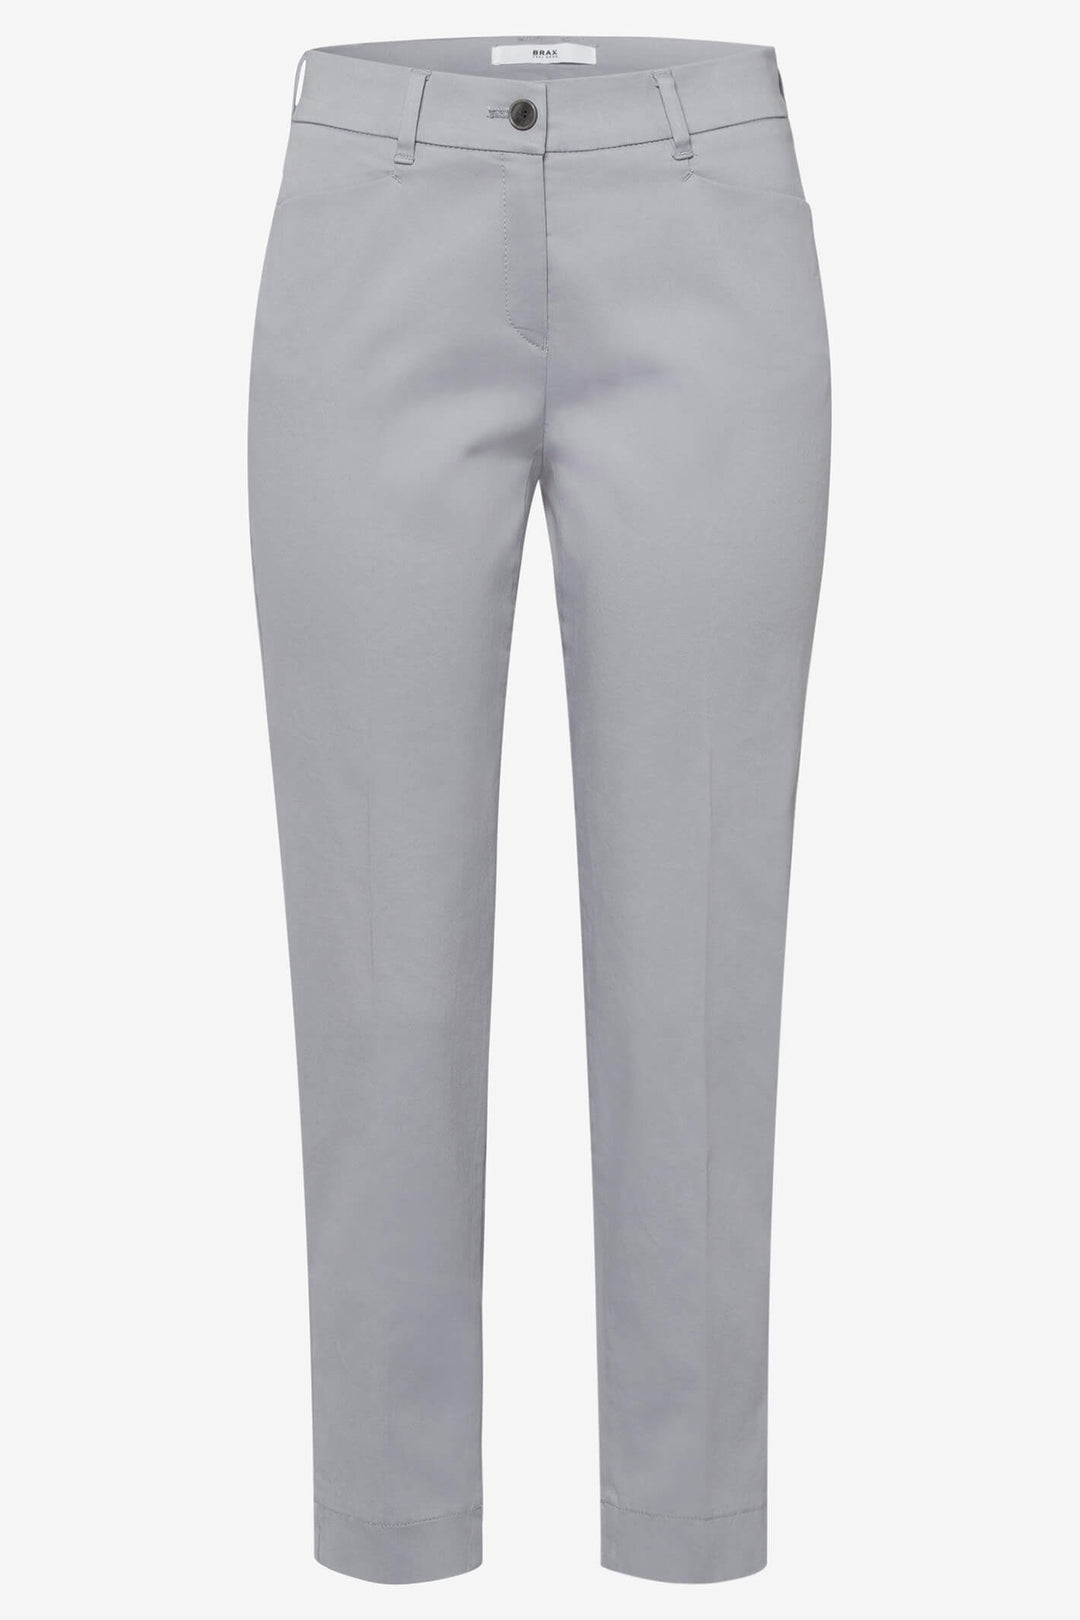 Brax 72-1458 09 Mara S Light Grey Slim Fit Trousers - Shirley Allum Boutique